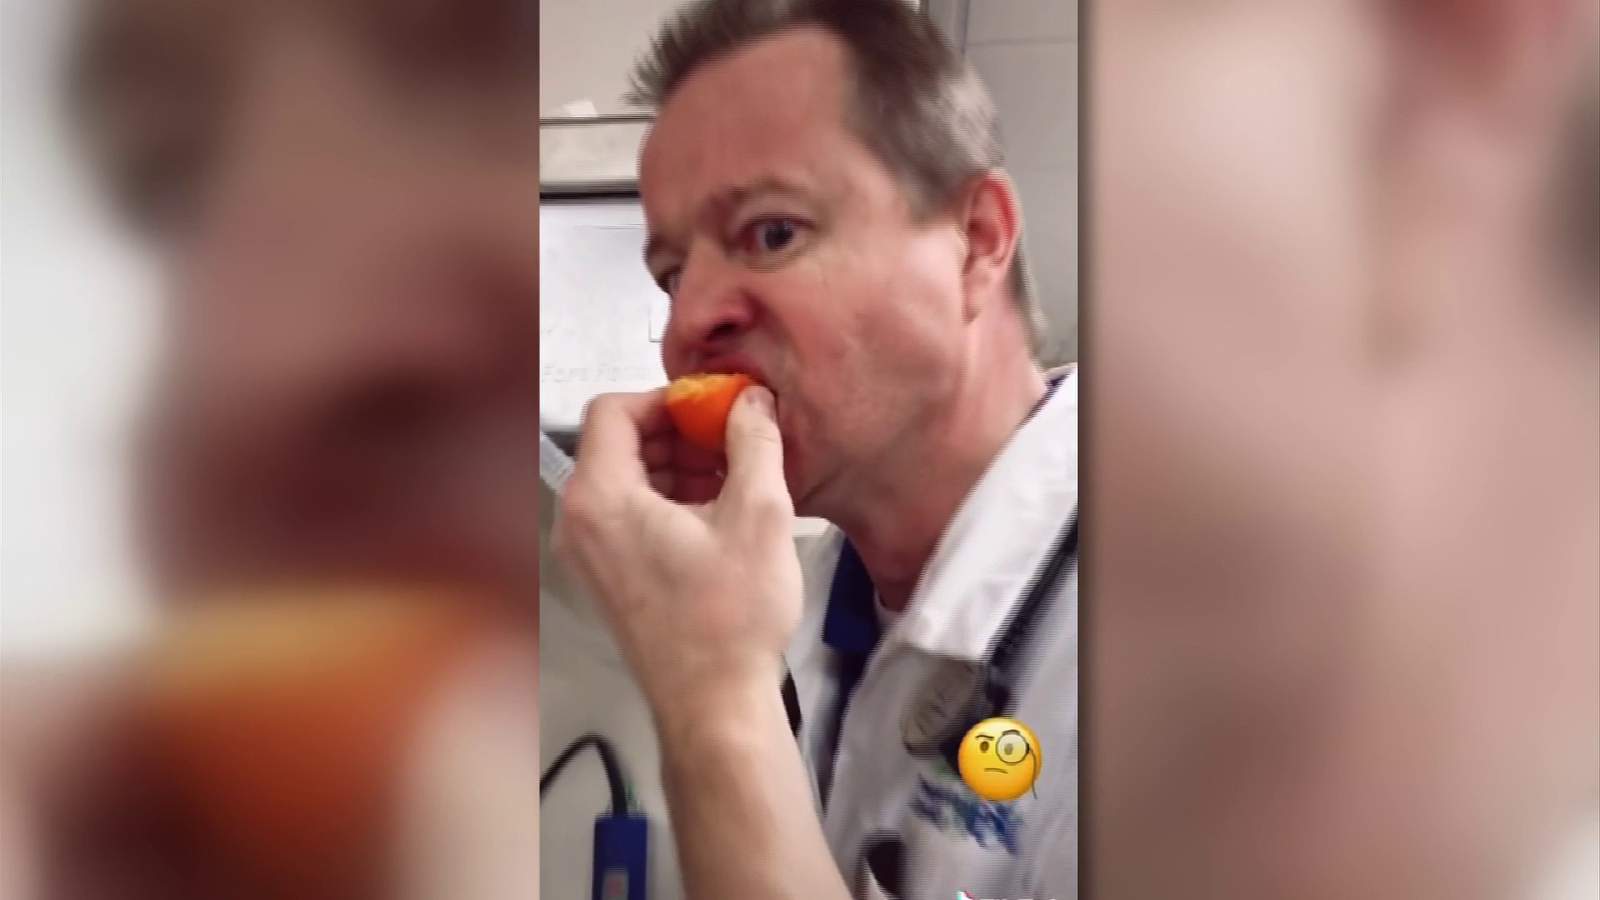 Danville veterinarian sparks how to eat an orange debate with viral video